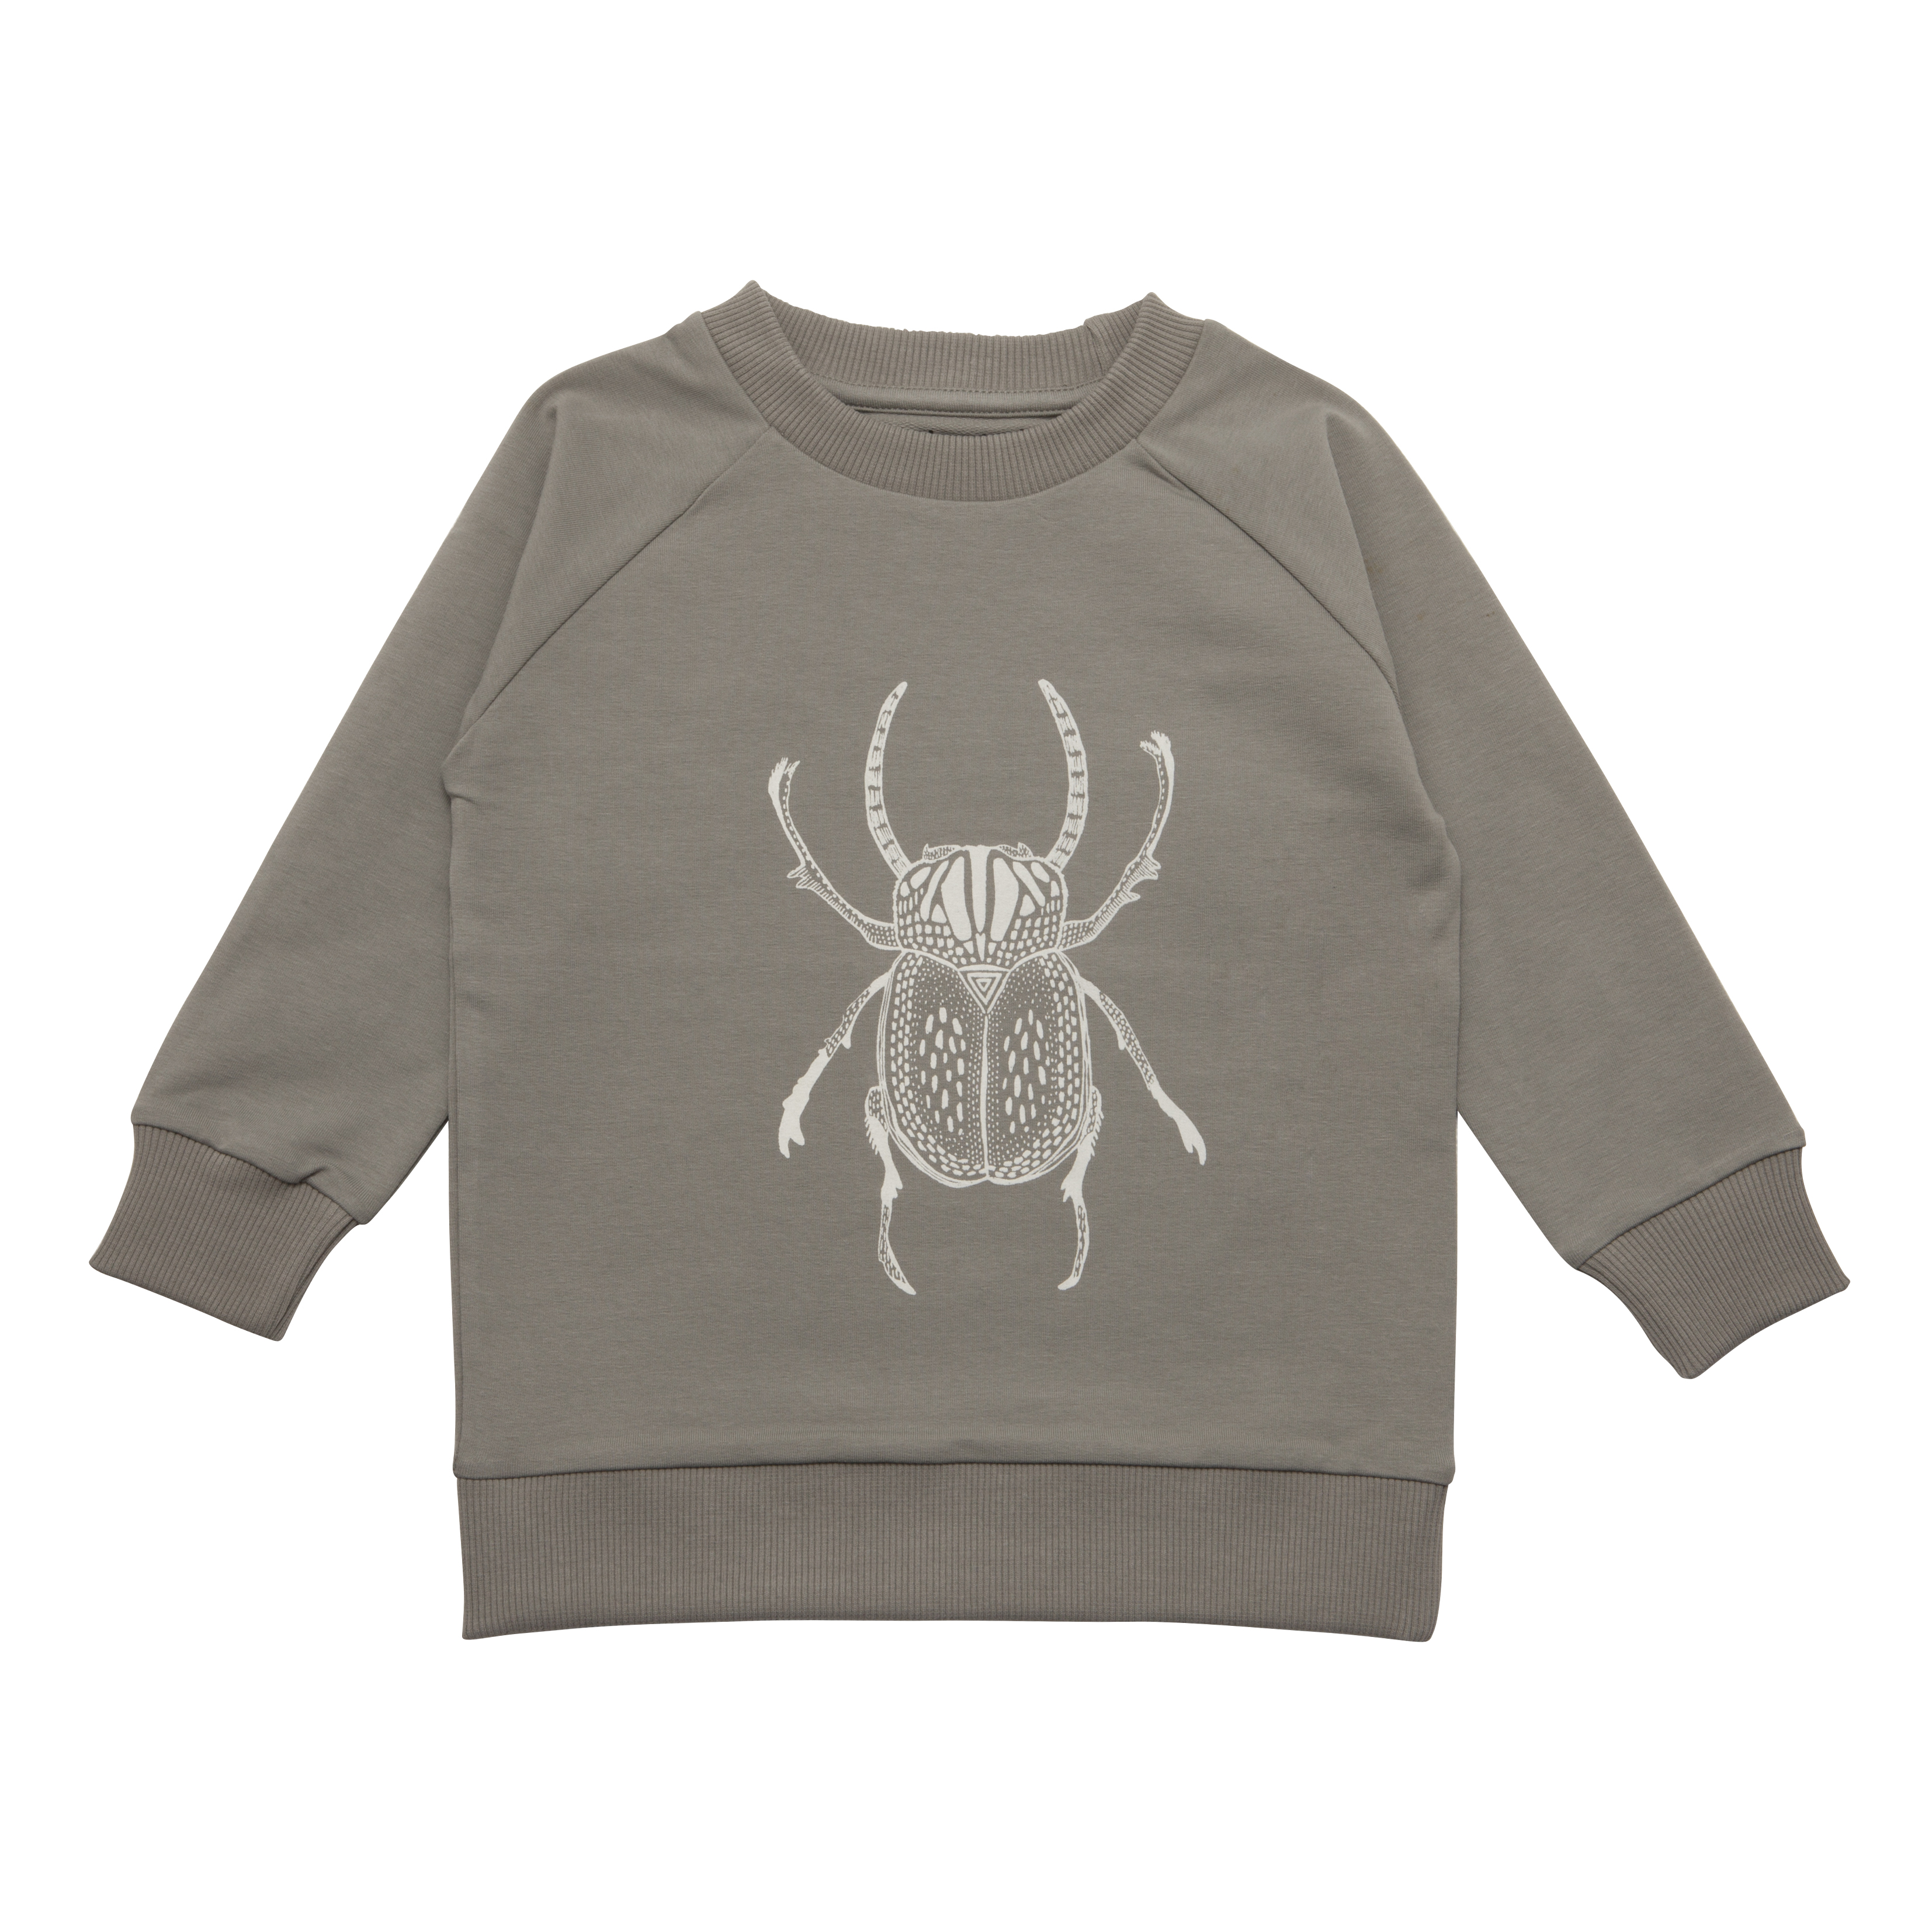 Beetle sweater